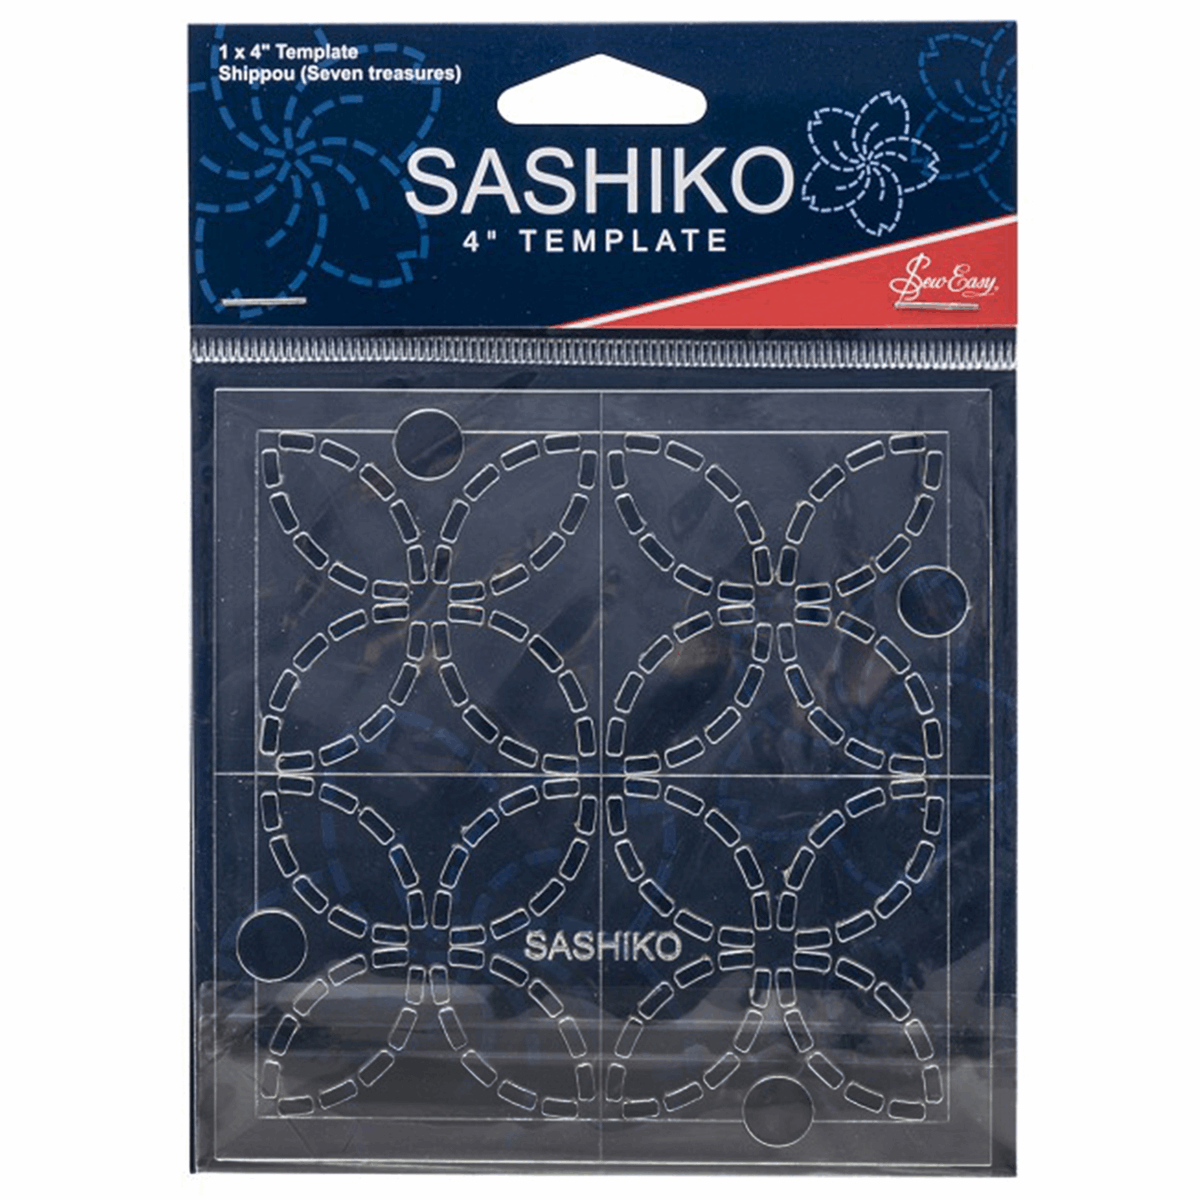 Sew Easy Sashiko Template - Shippou (Seven Treasures)